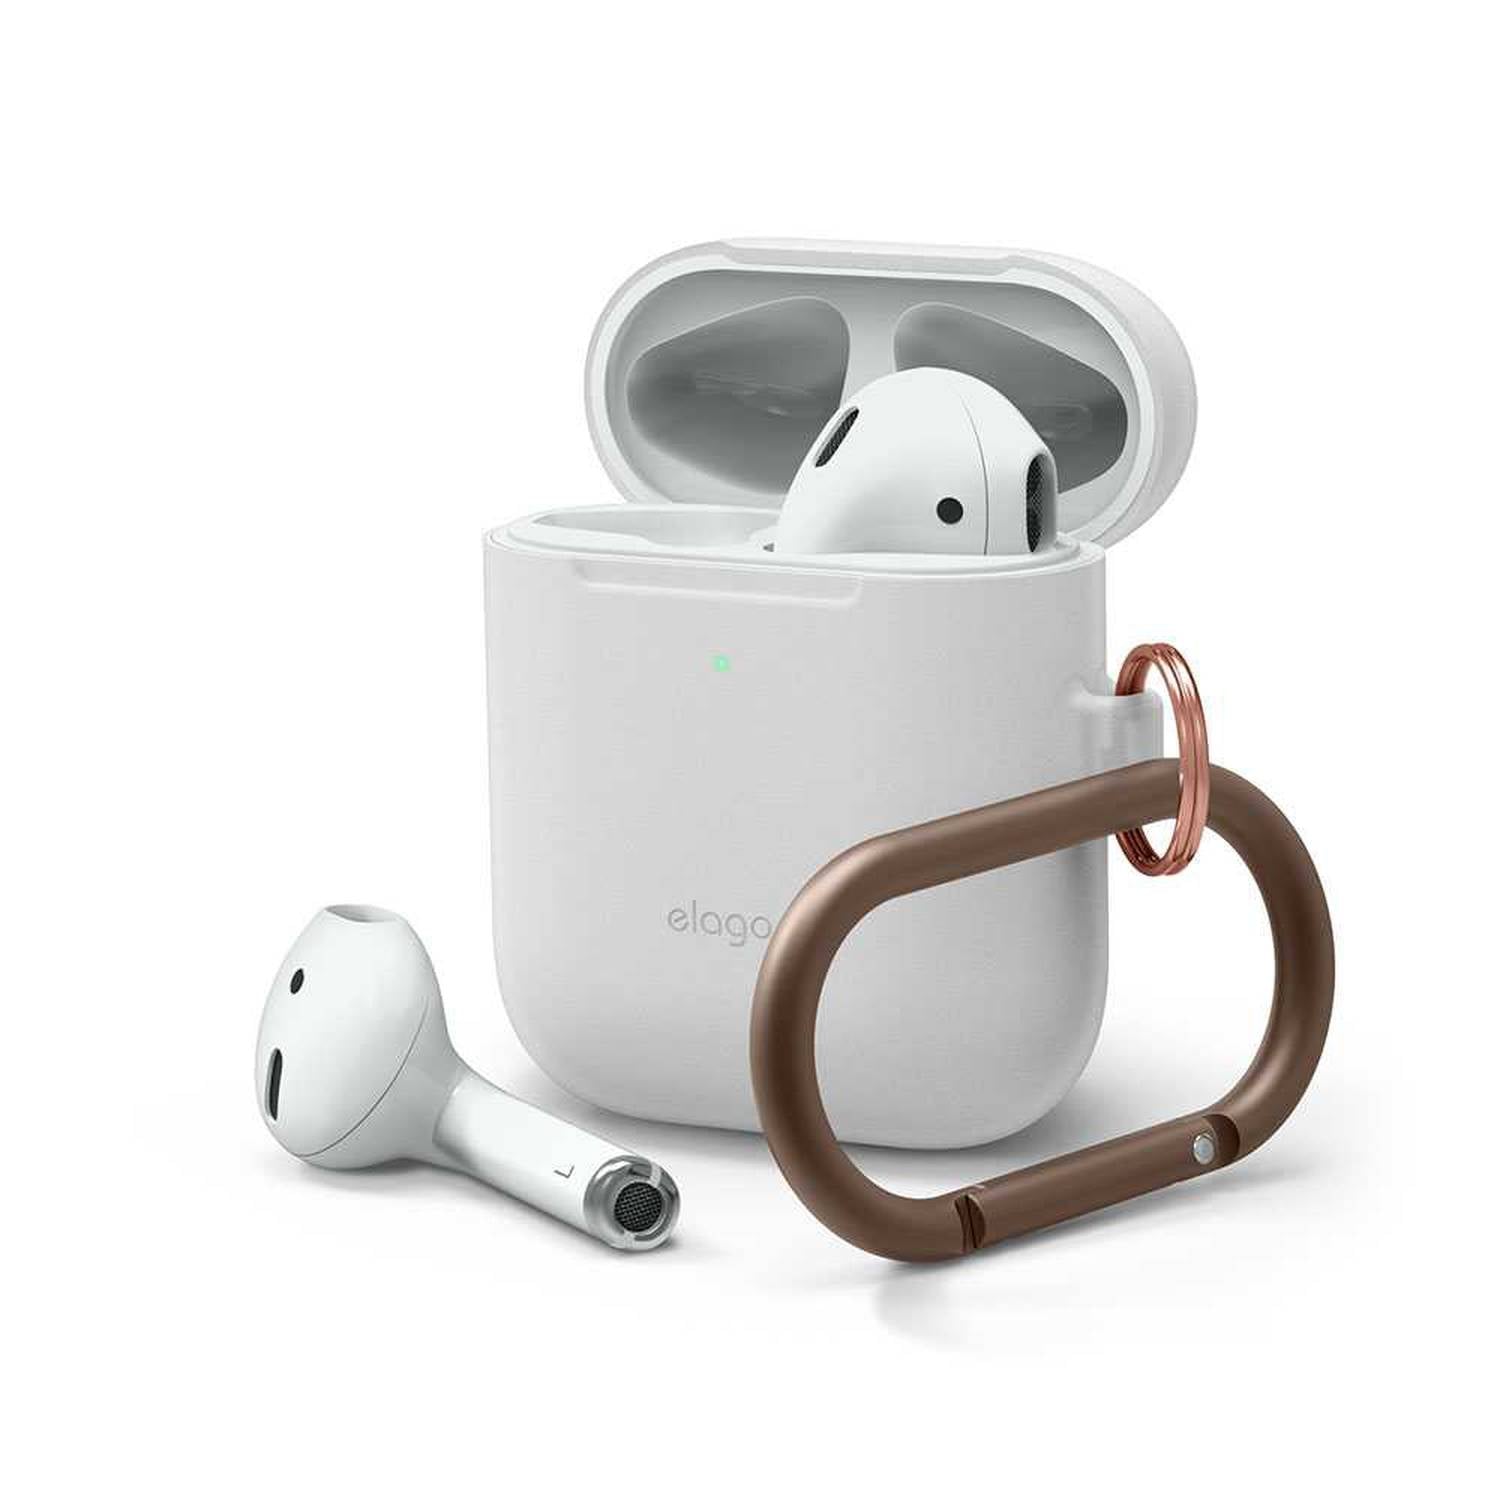 غطاء Elago Skinny Hang Case متوافق مع أجهزة Apple AirPods 1 & 2 Generation